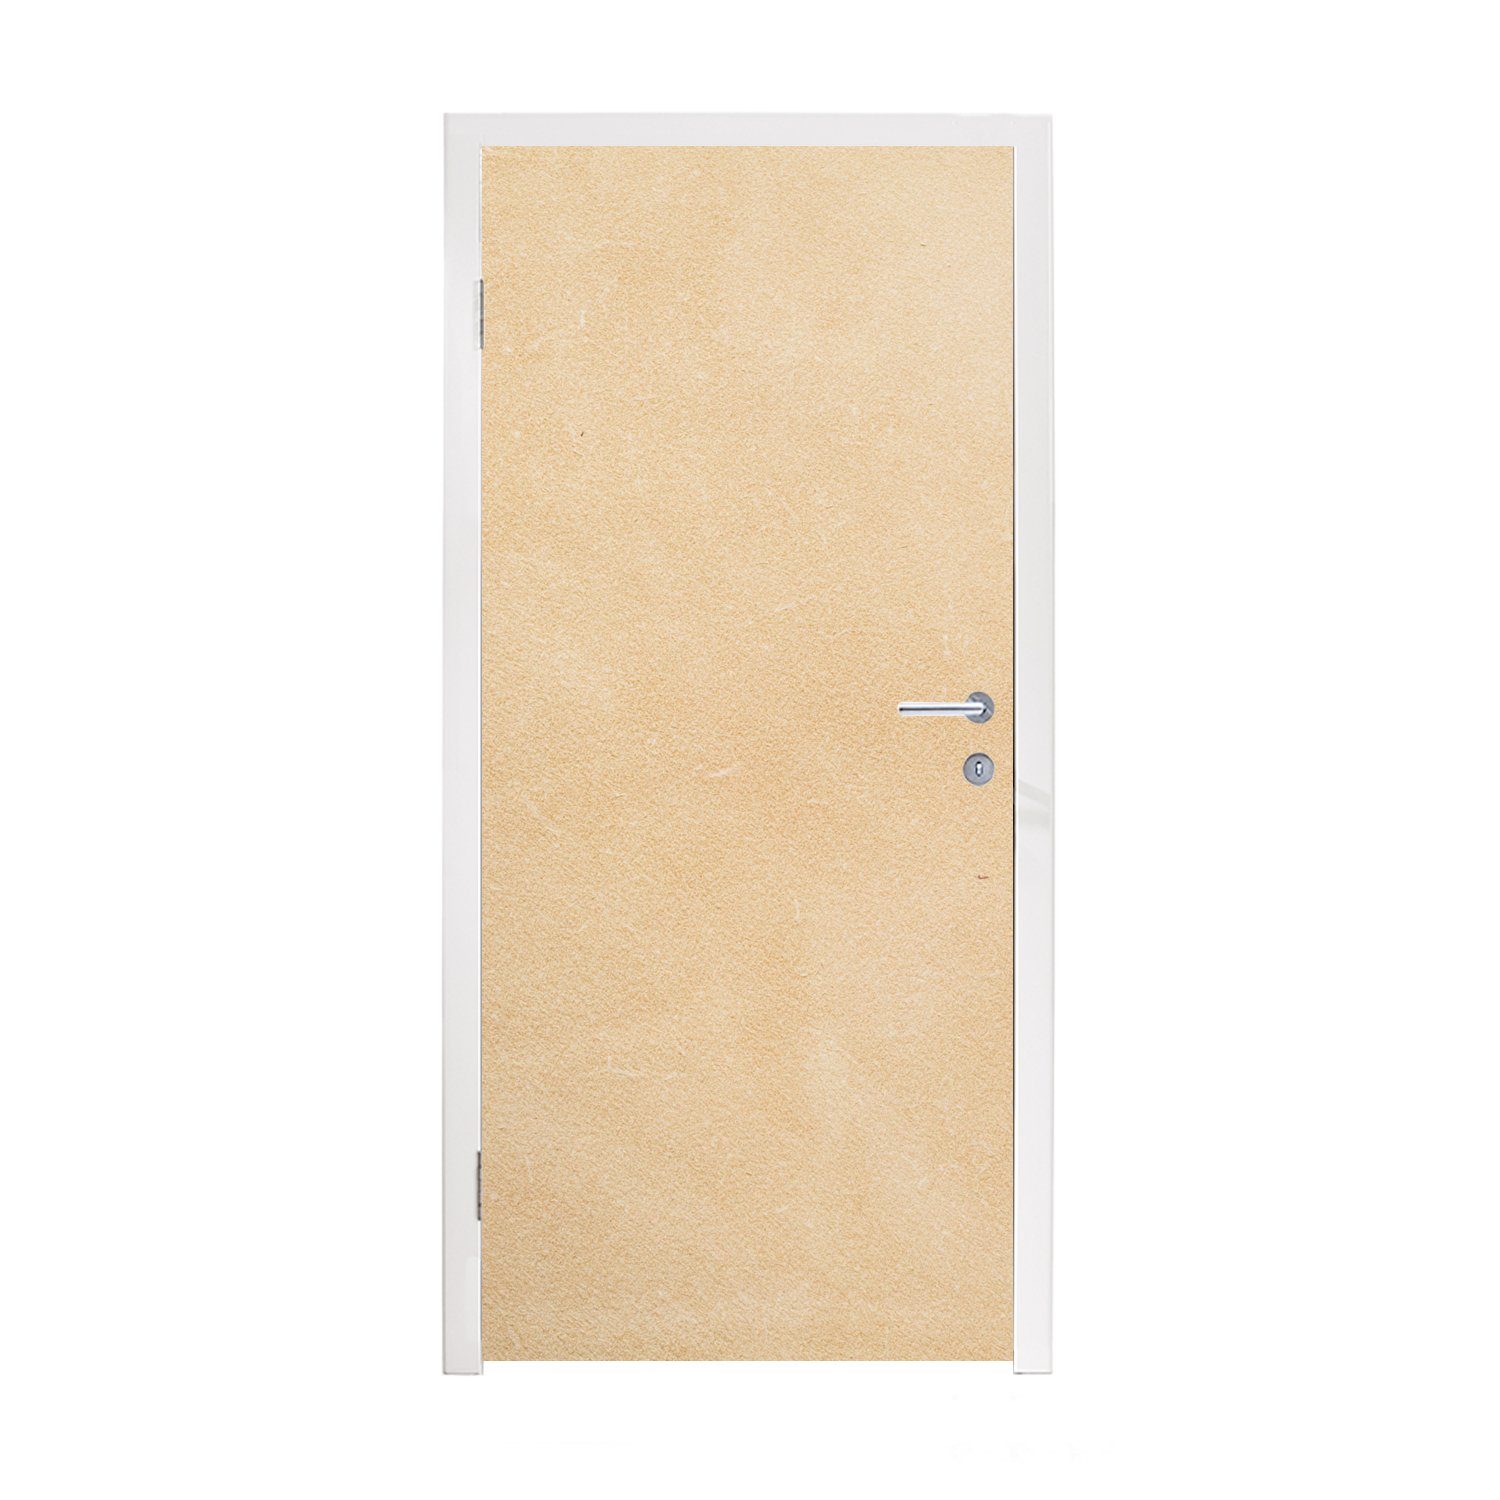 MuchoWow Türtapete Leder - Strukturiert - Lederoptik - Beige, Matt, bedruckt, (1 St), Fototapete für Tür, Türaufkleber, 75x205 cm